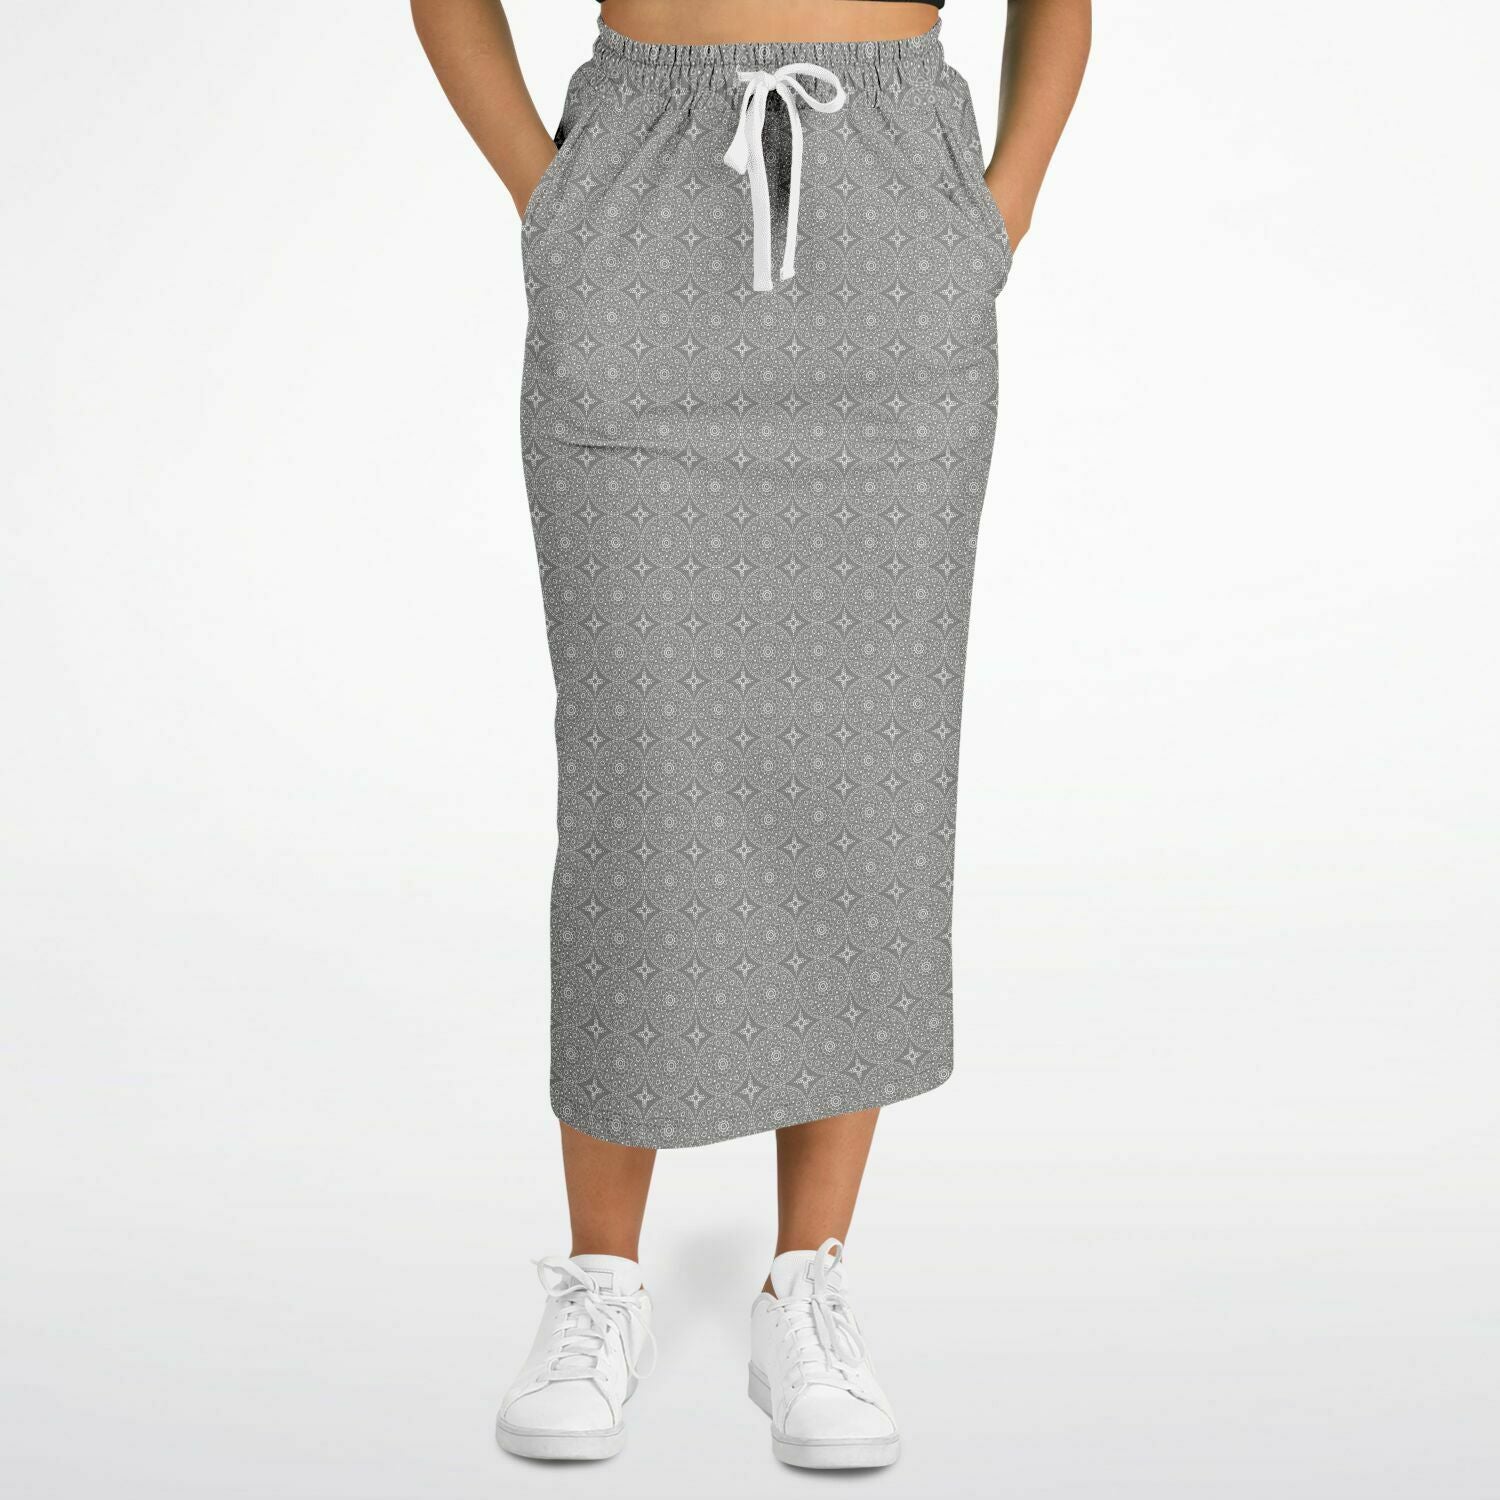 Boho Long Pocket Skirt - Grey